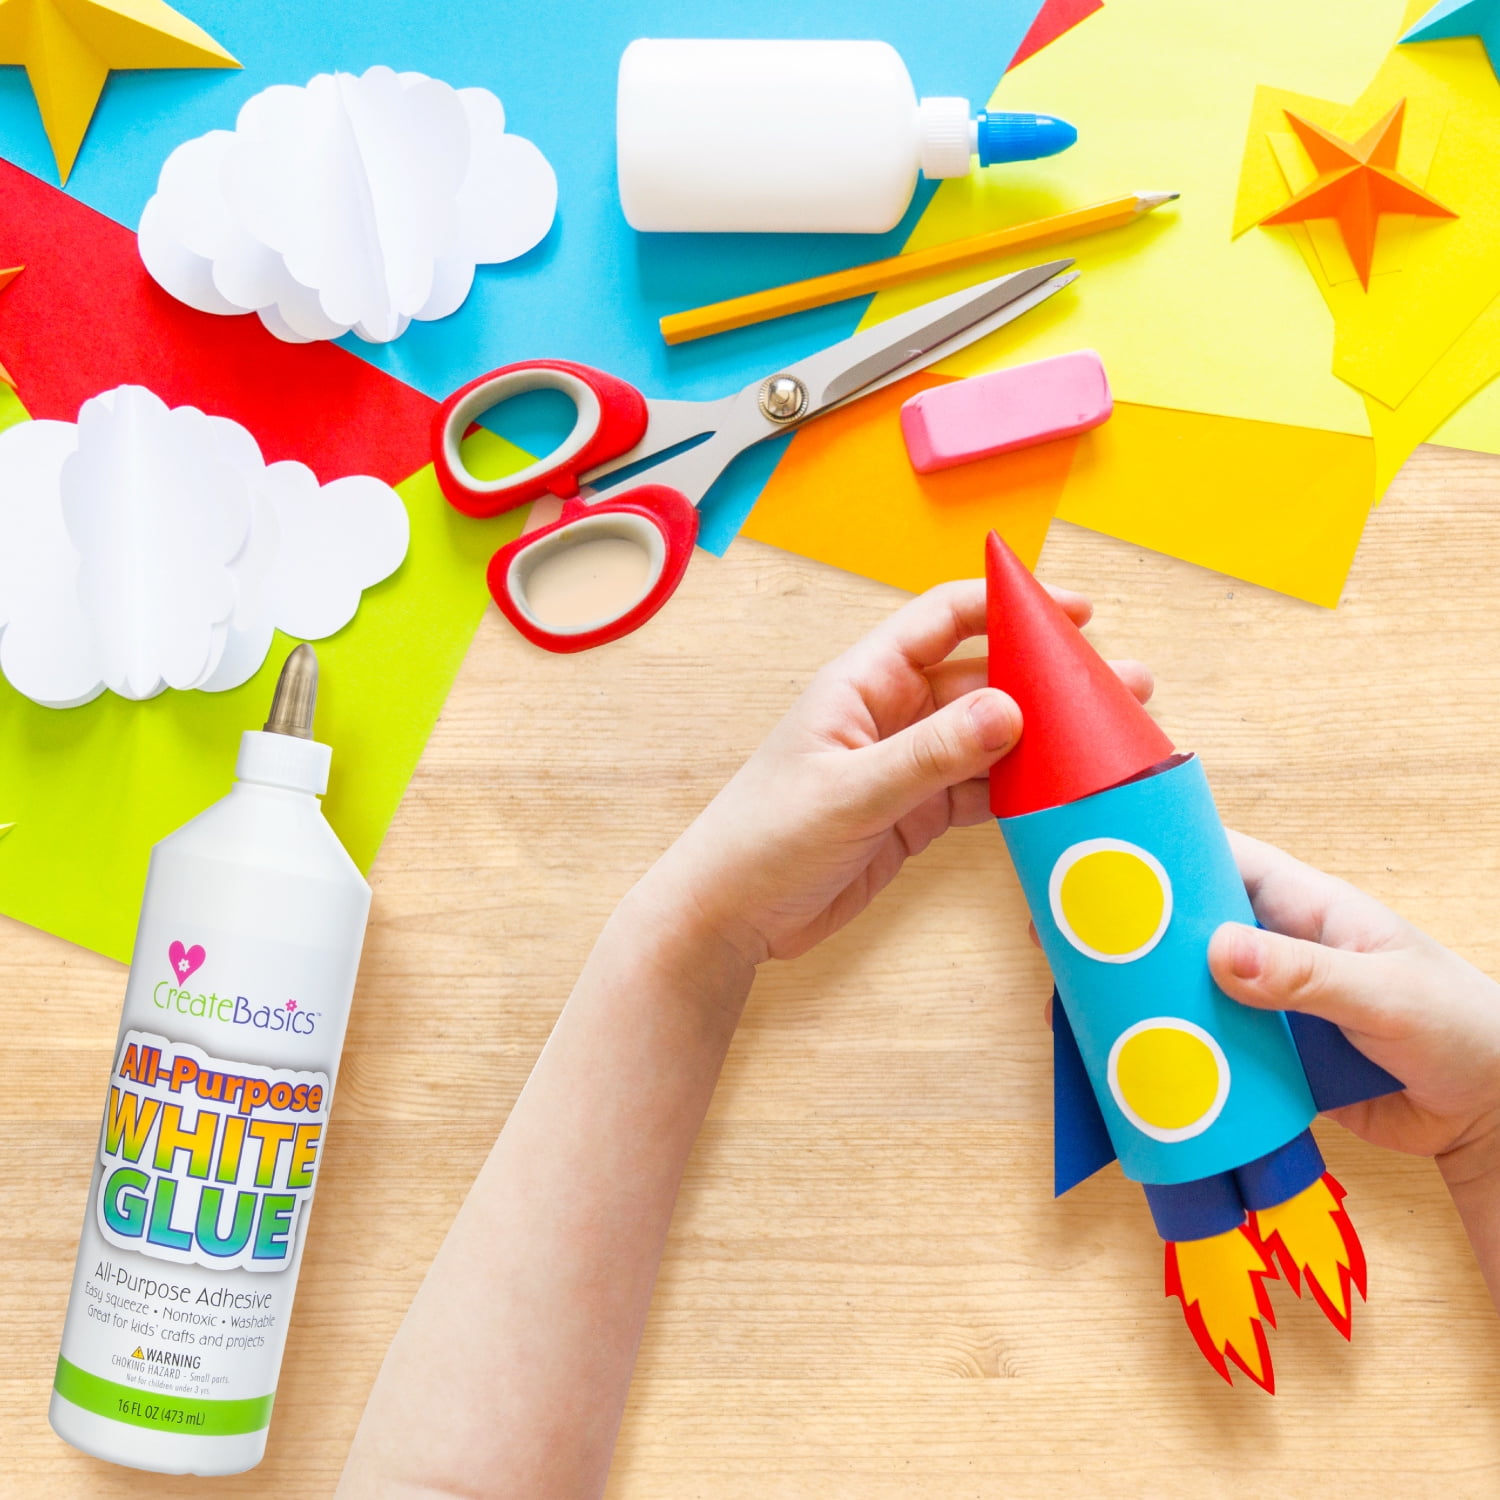 Create Basics All-Purpose Clear Glue 16 fl oz, Great For Kids